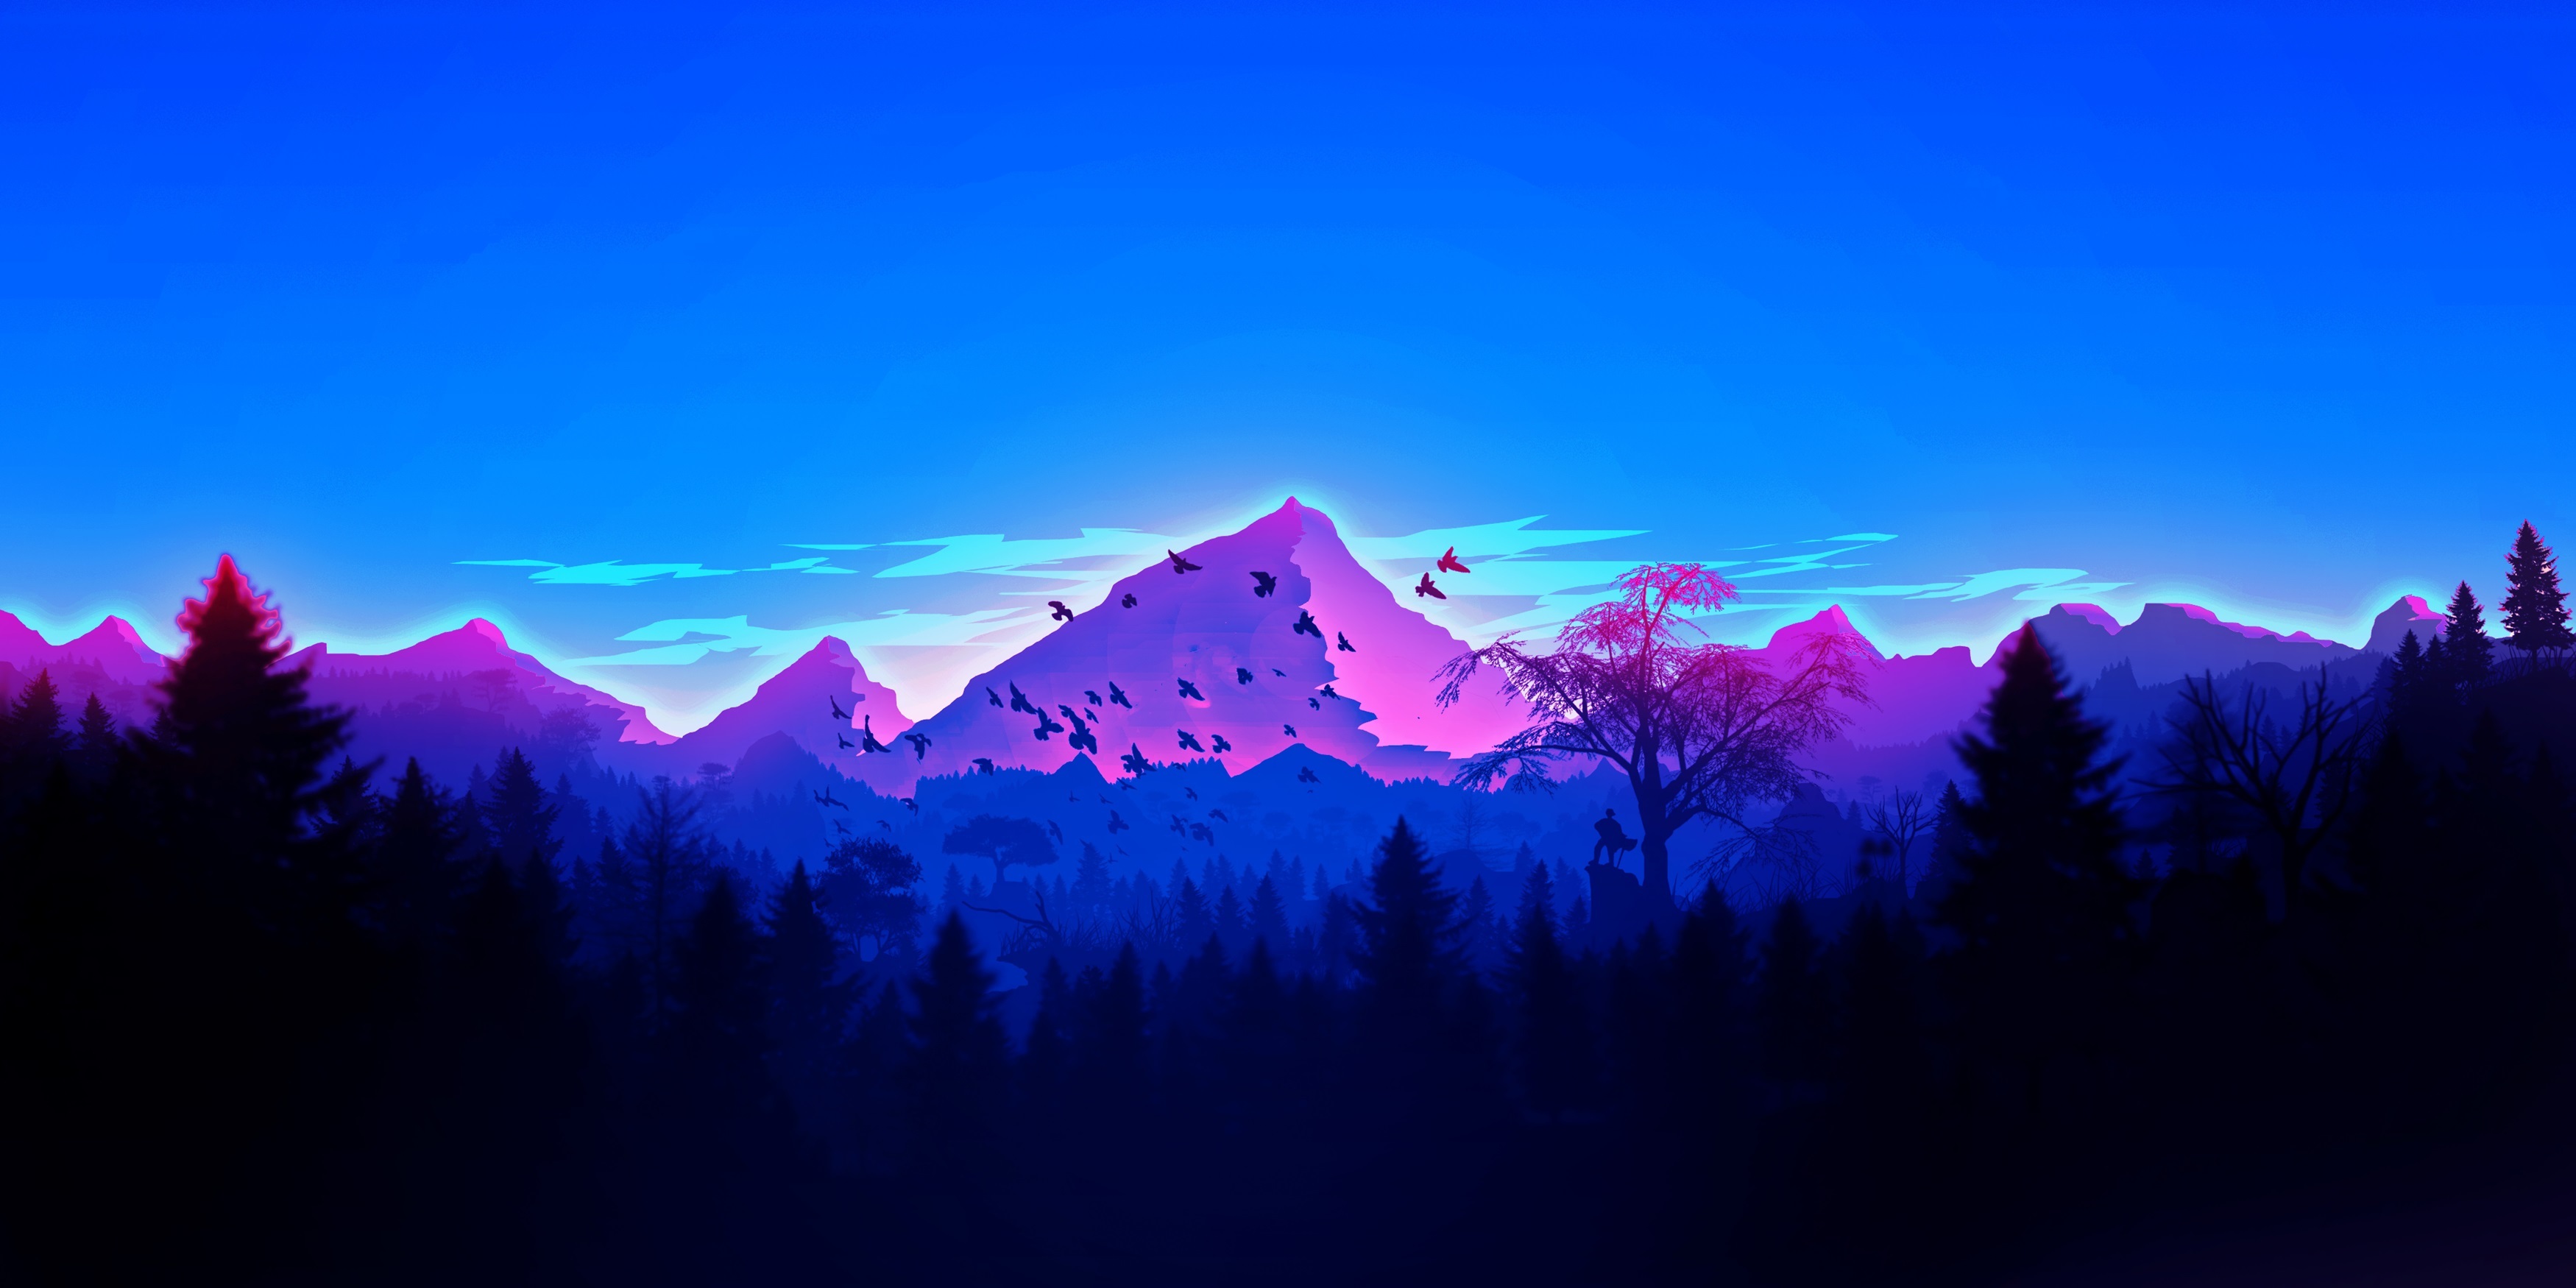  Vaporwave  Minimalism Forest Wallpaper  HD Artist 4K  